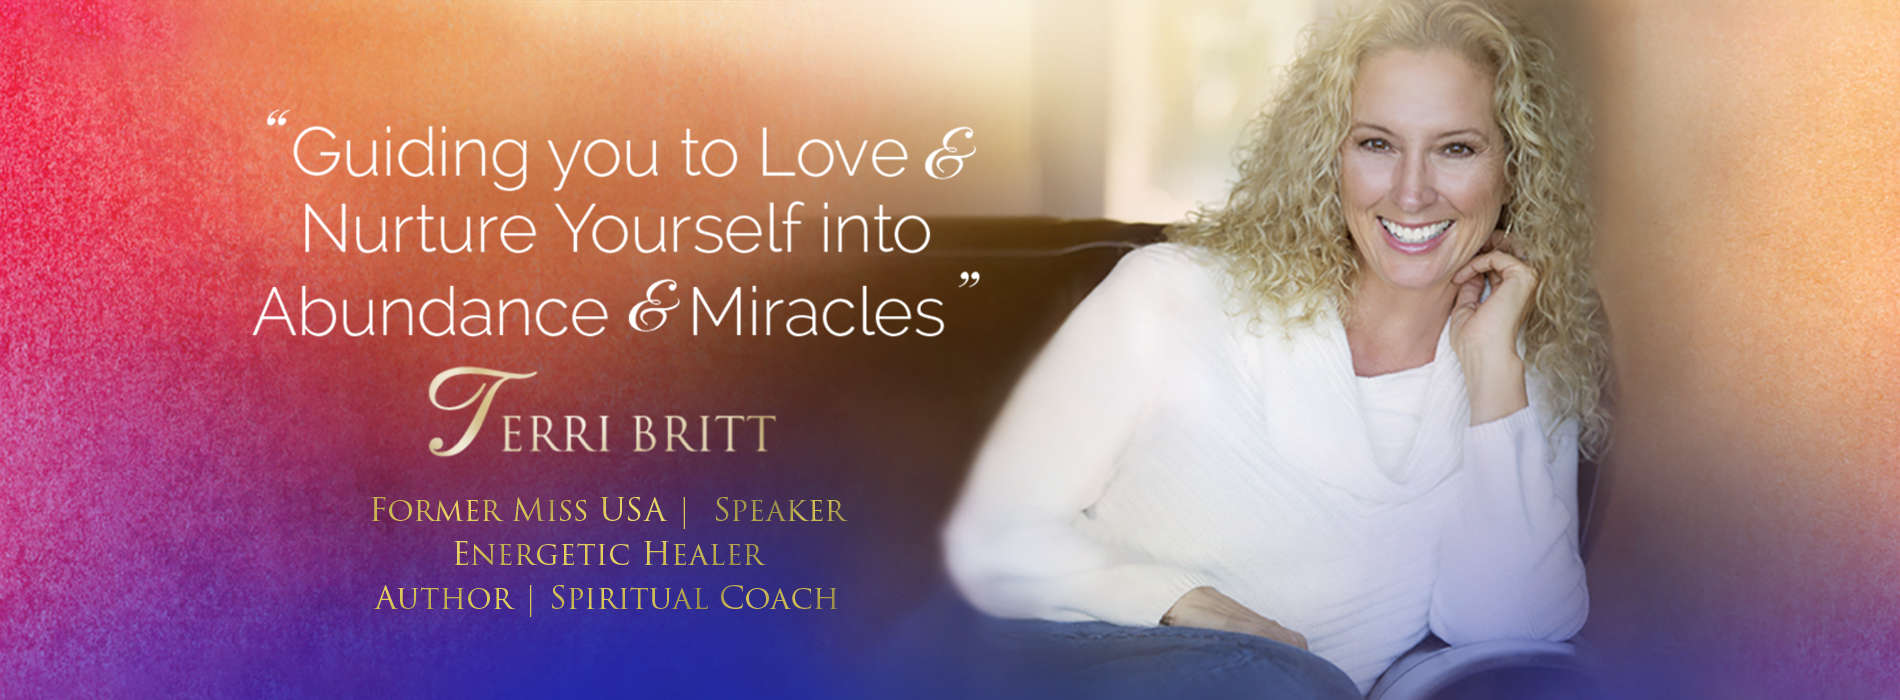 Terri Britt: Inspirational Speaker, Life Coach, Award Winning Author and Former Miss USA